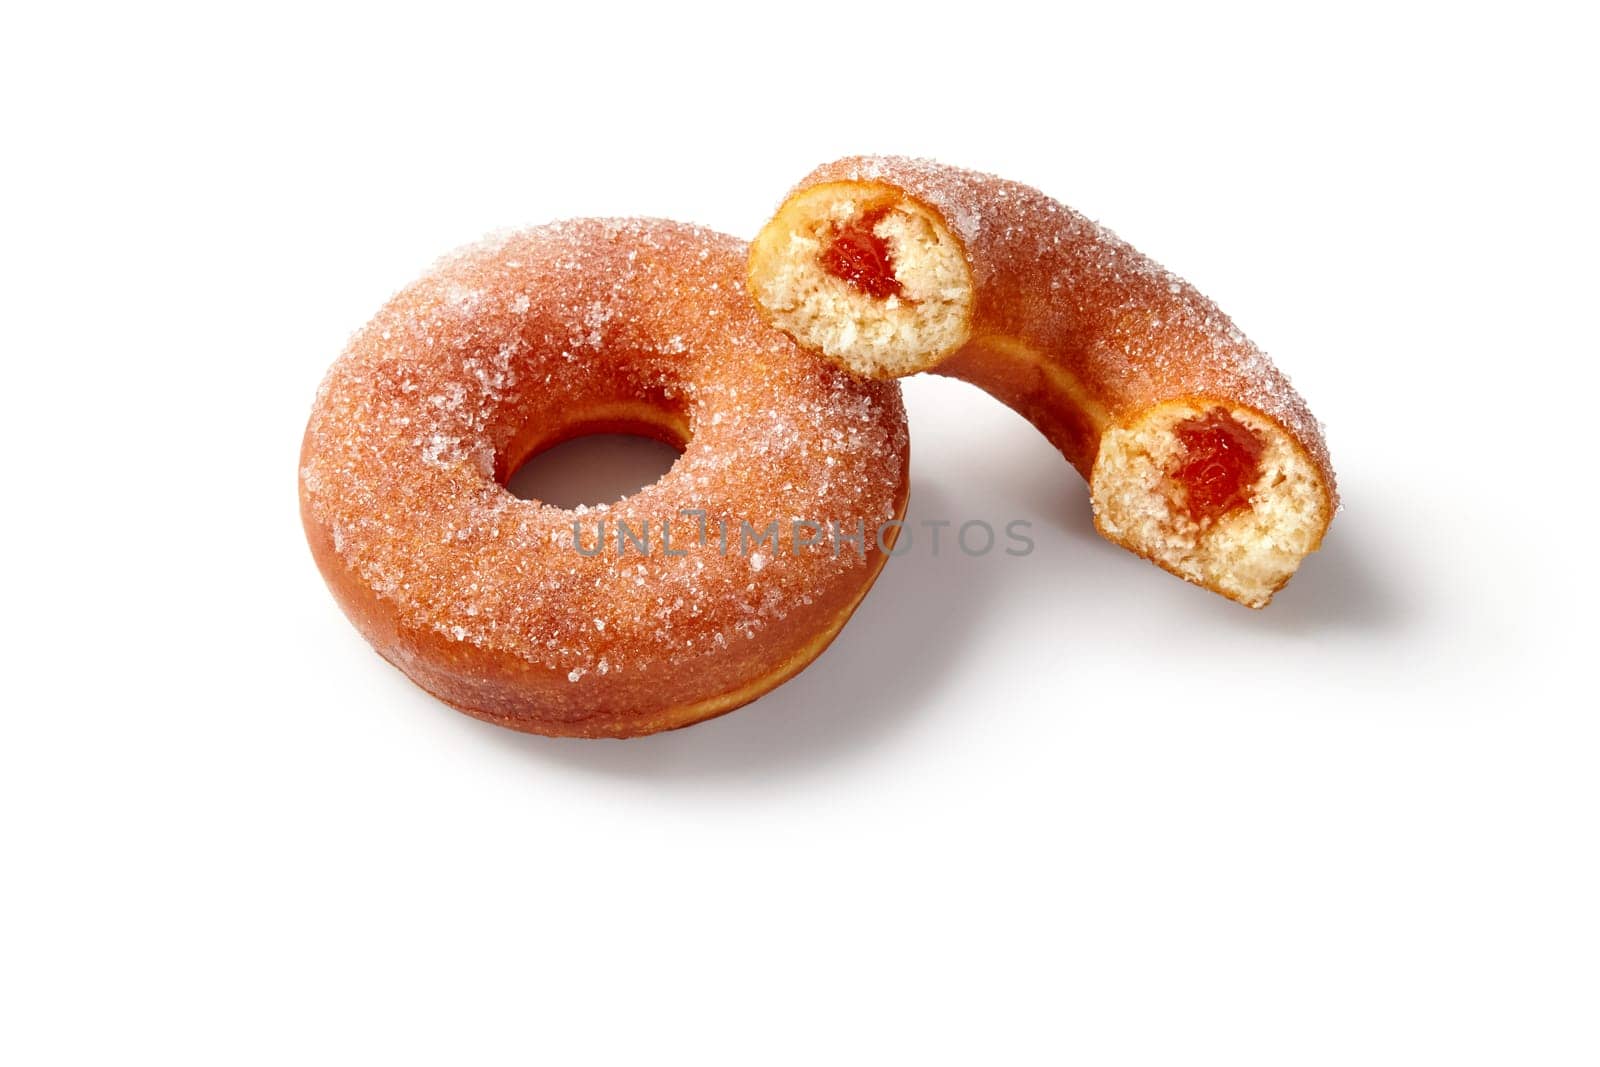 Soft fluffy sugar donuts with fruit jelly filling on white by nazarovsergey